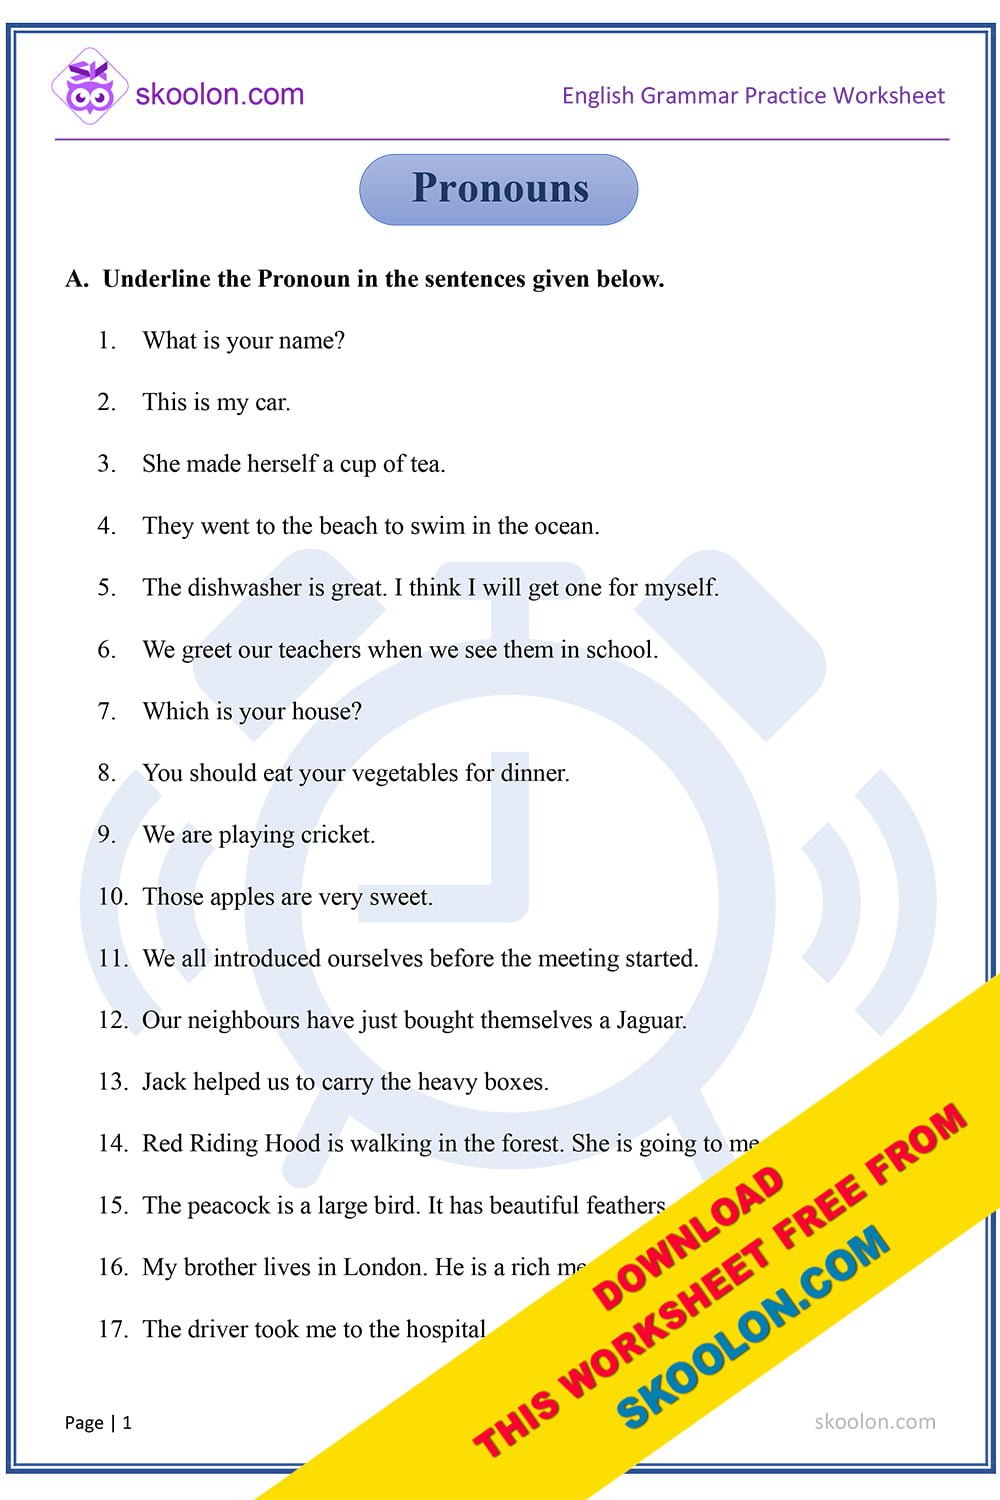 Pronouns with Answers 3 skoolon com